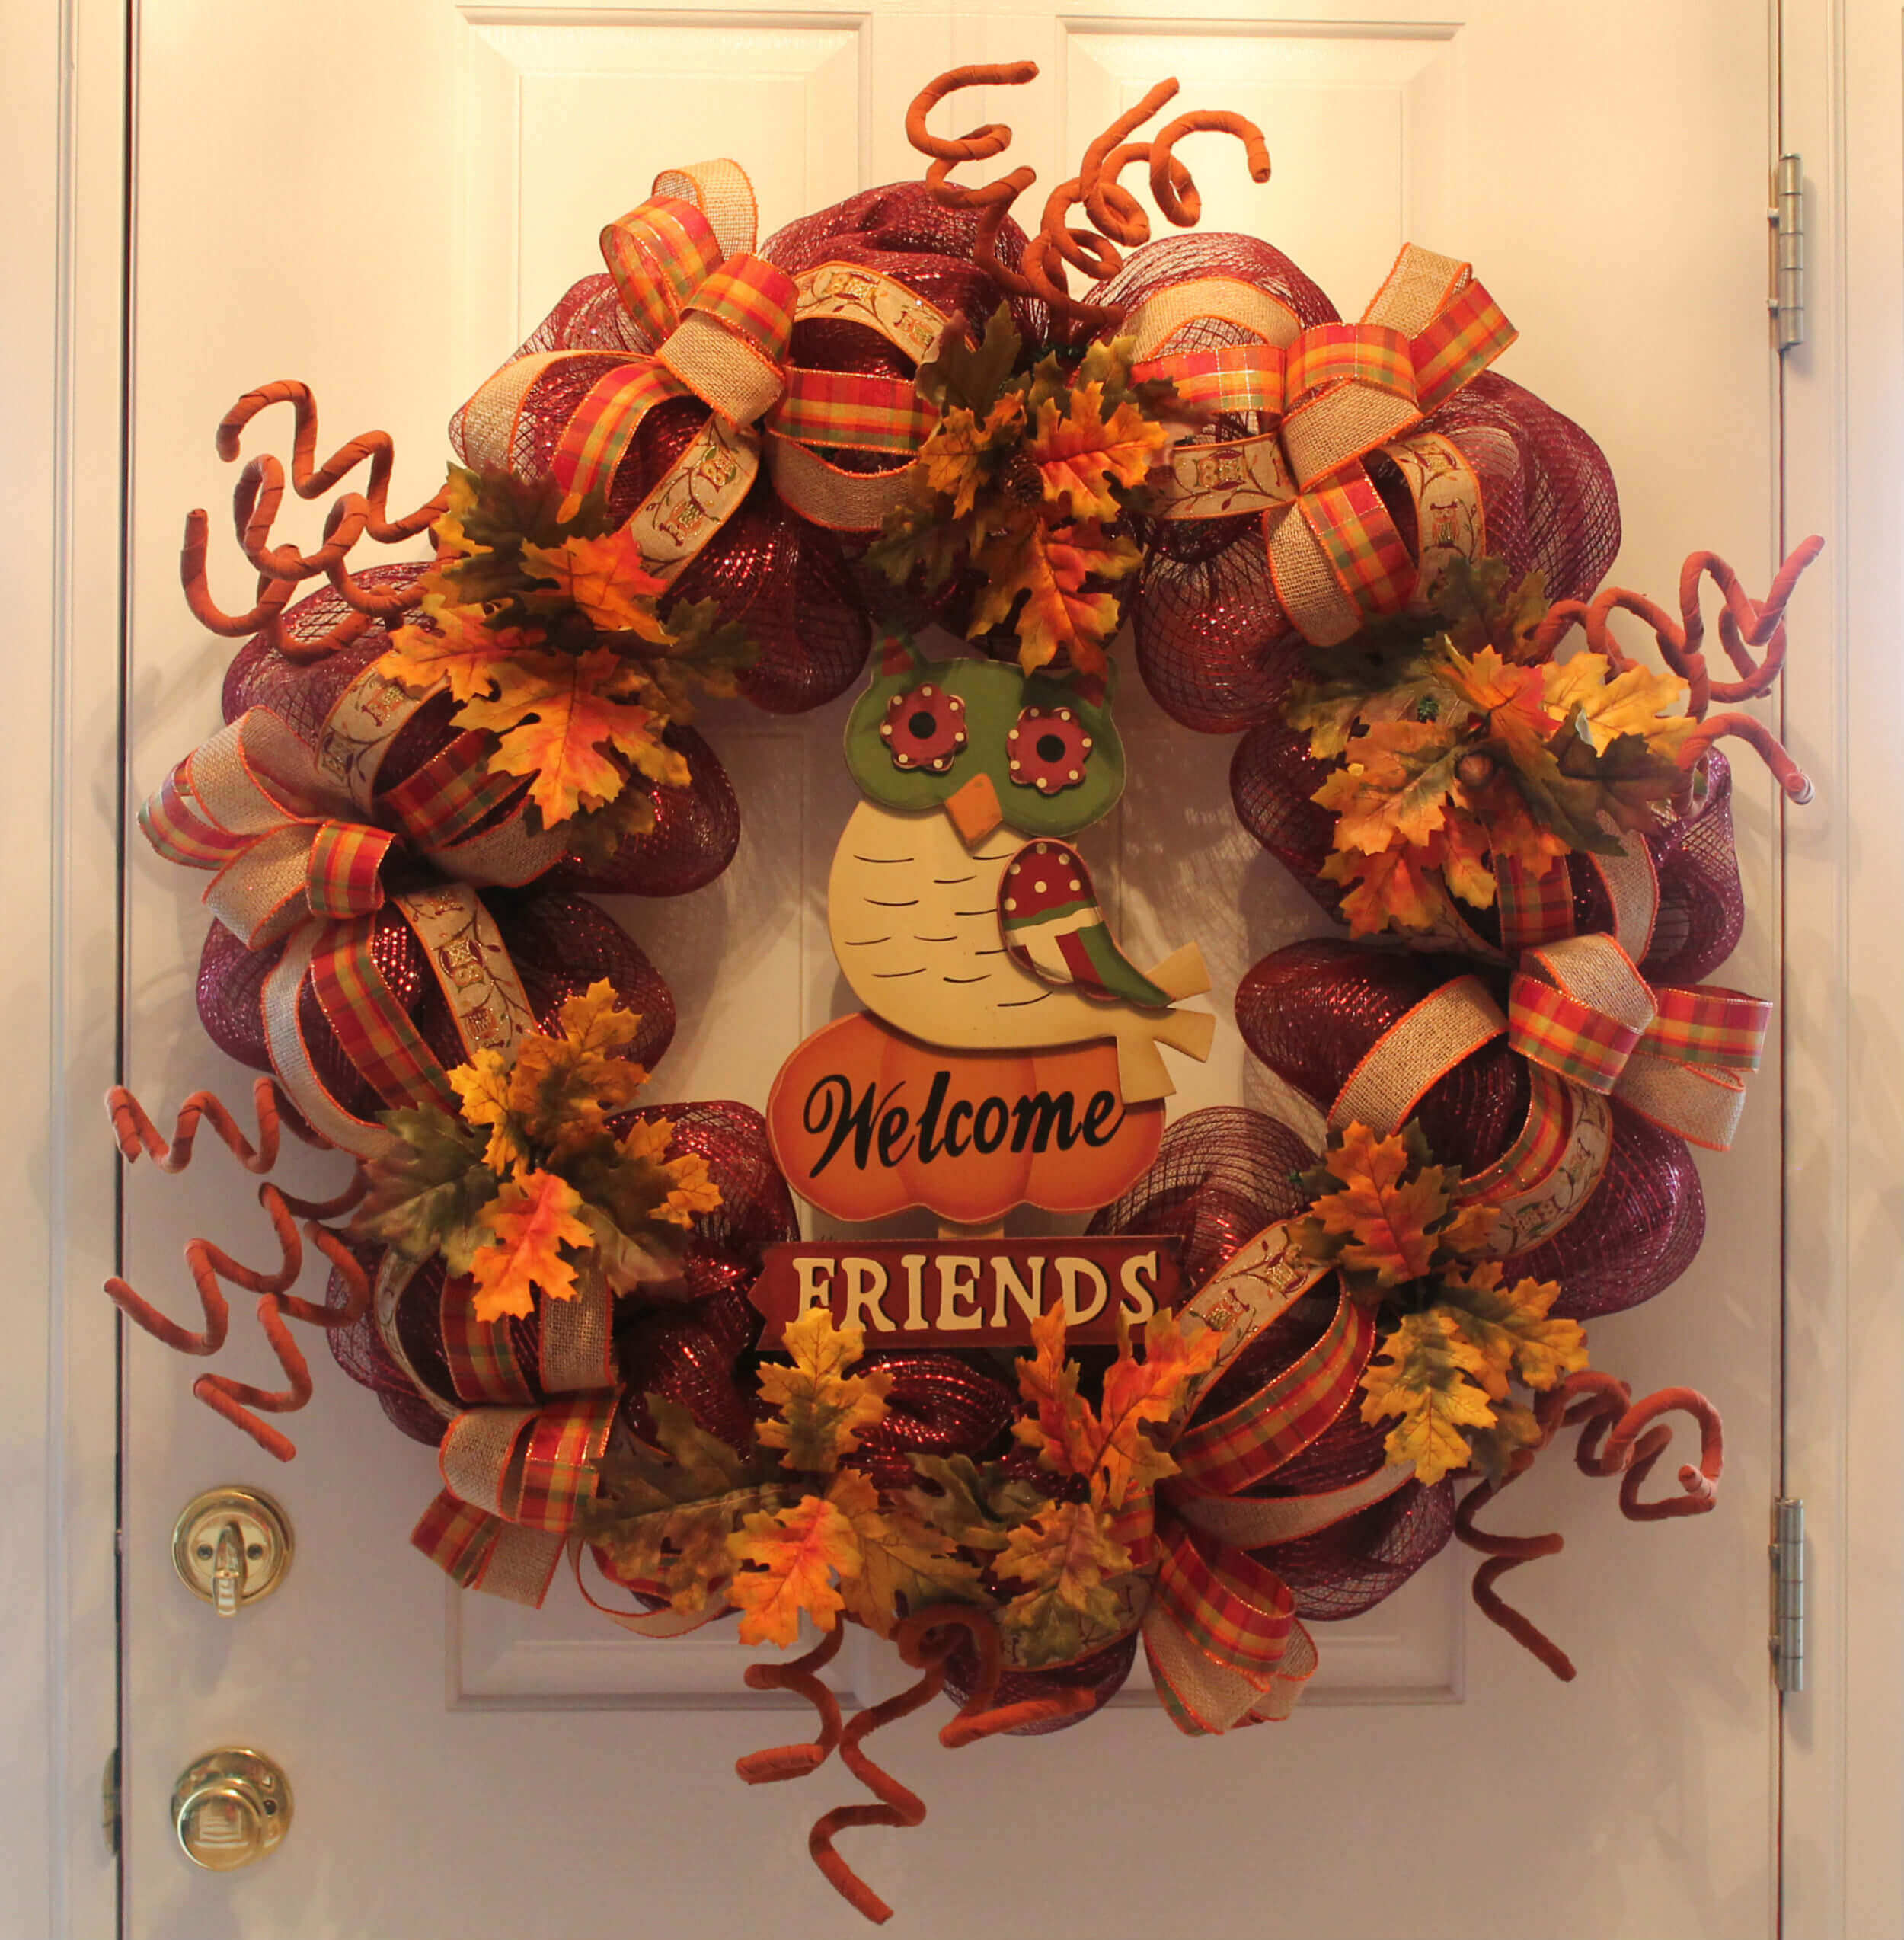 thanksgiving wreaths